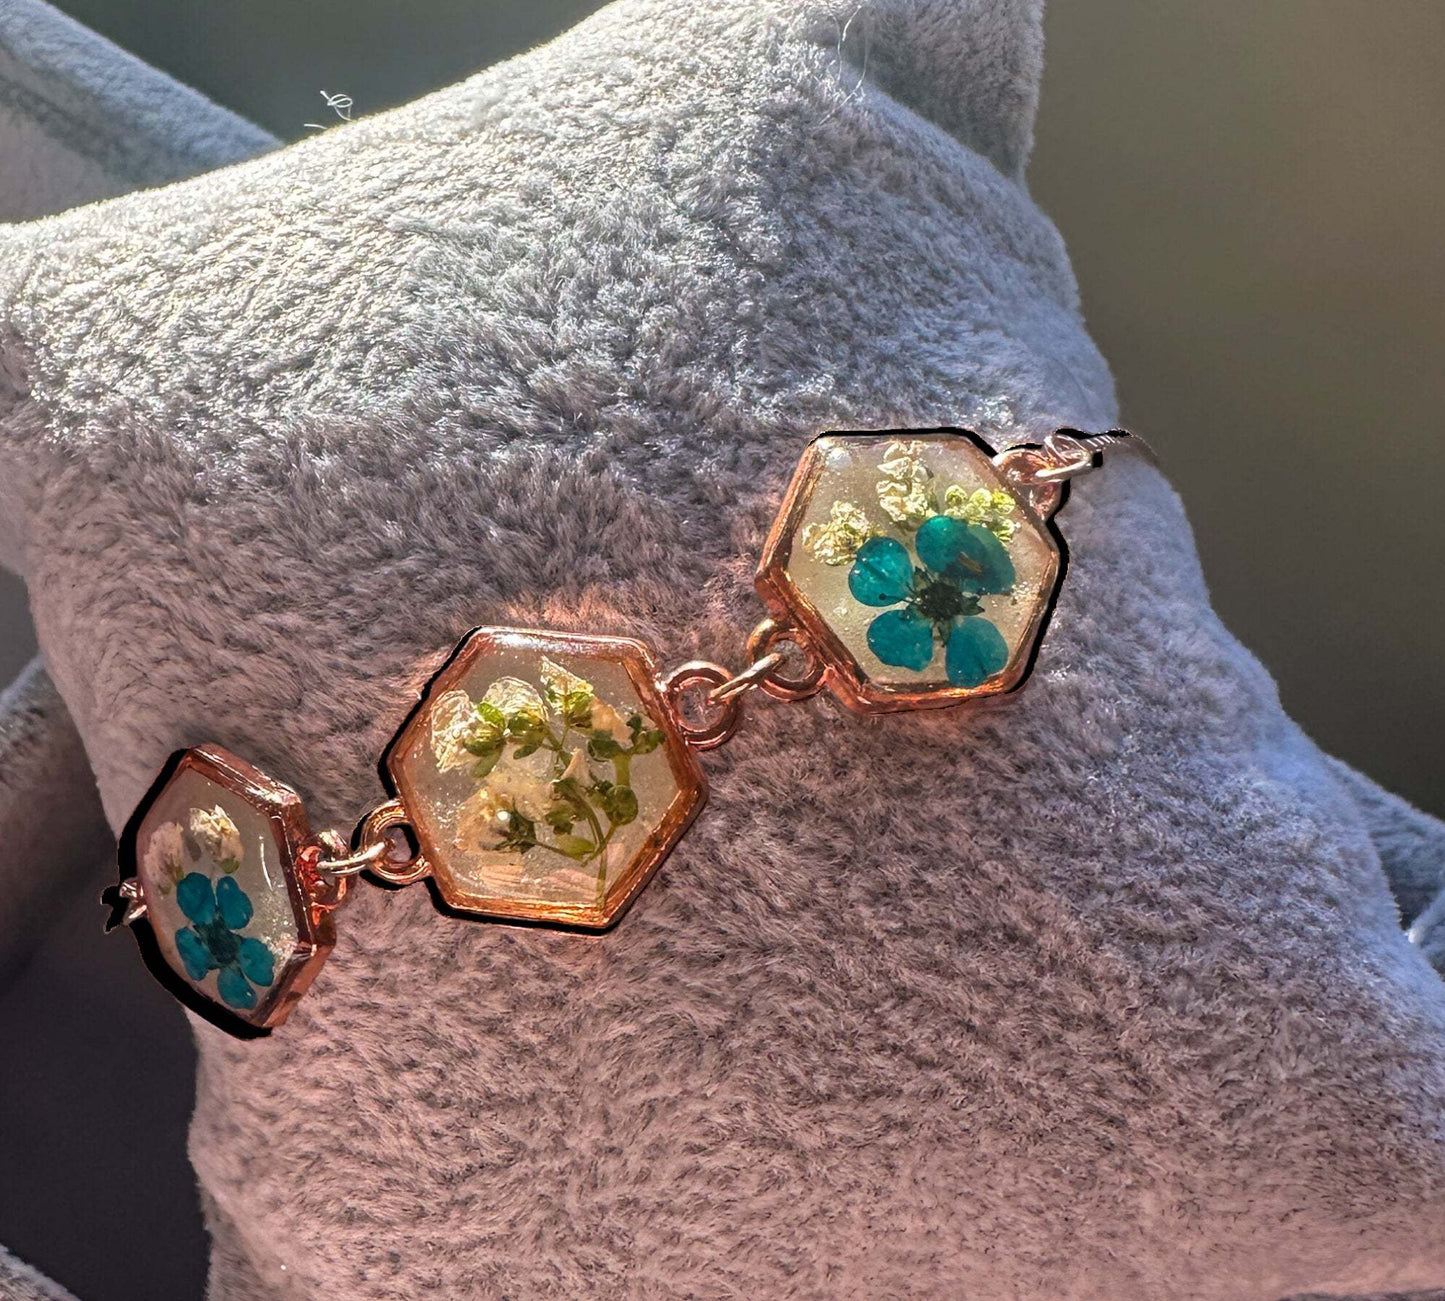 Glowing Garden: Handmade Rose Gold Trio Bracelet with Dried Flowers